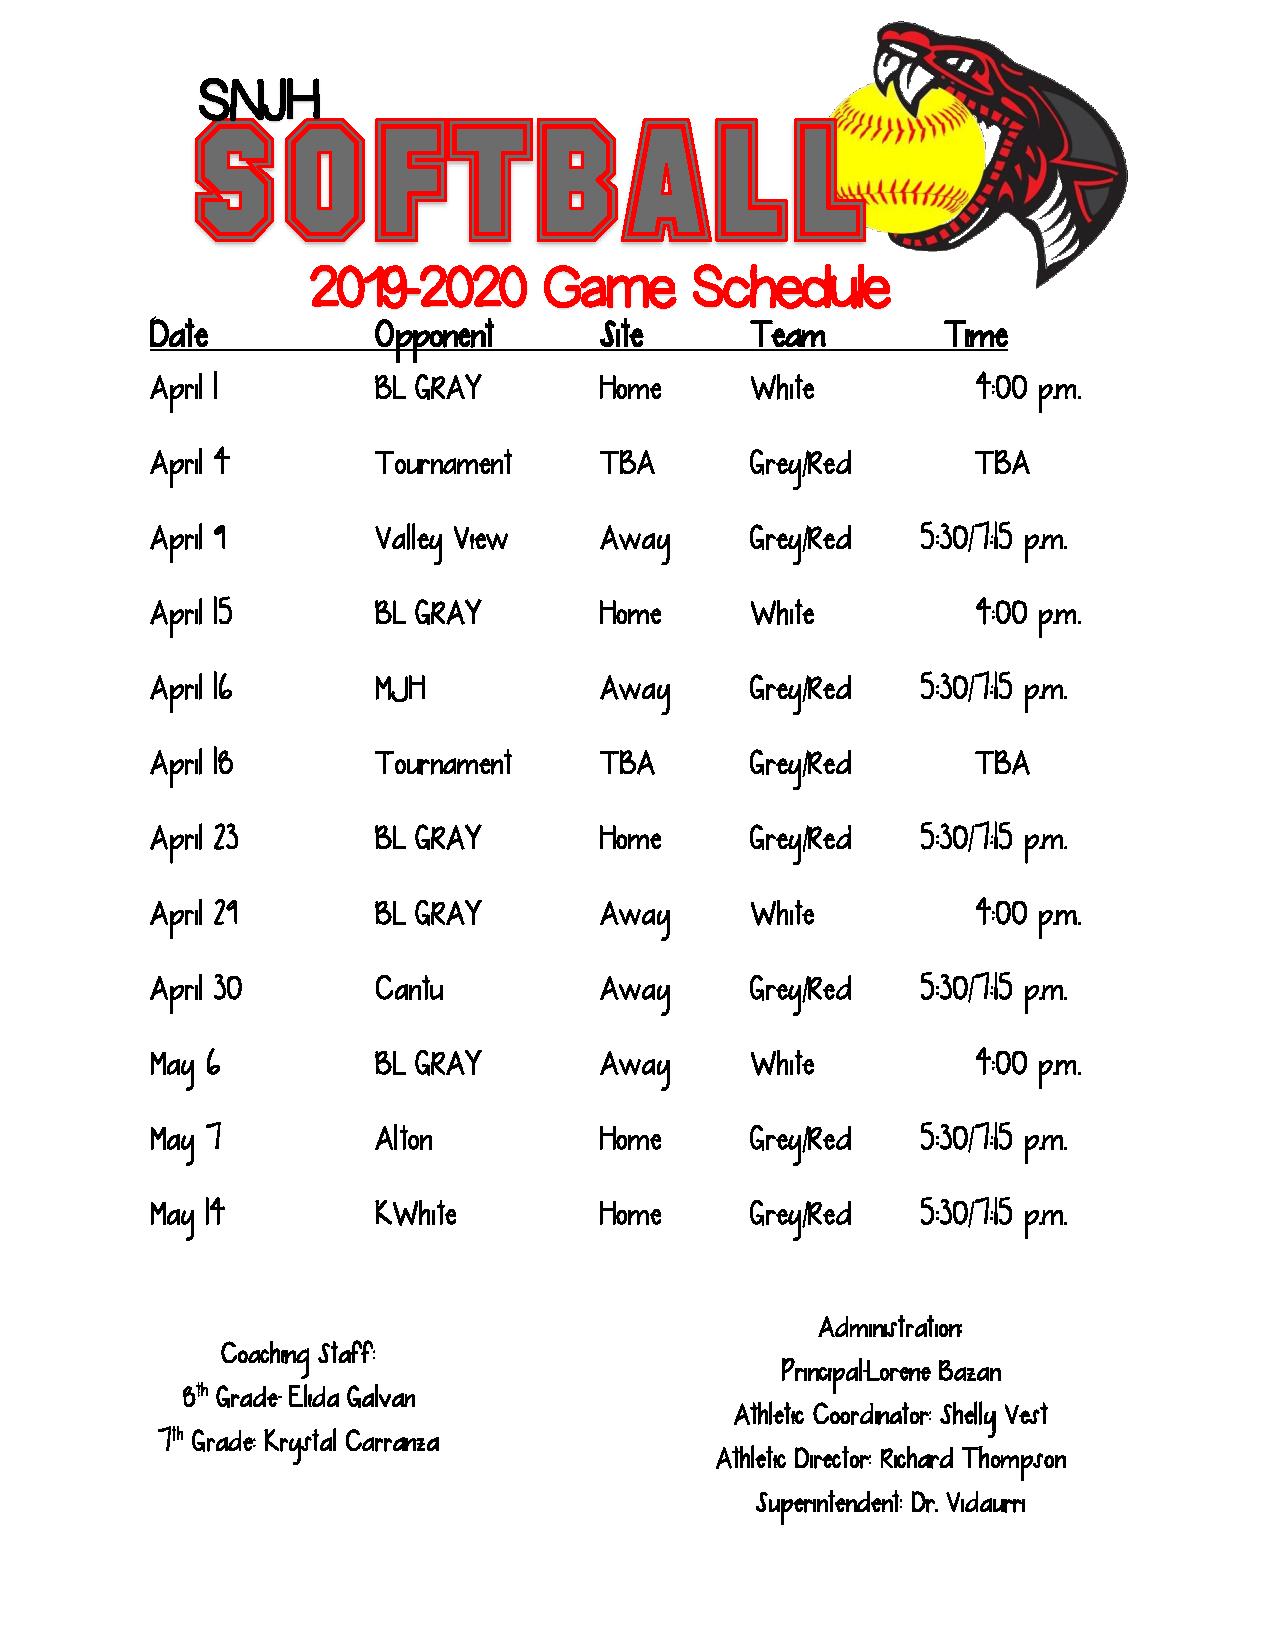 2020 Softball Schedule - Sharyland North Junior High School